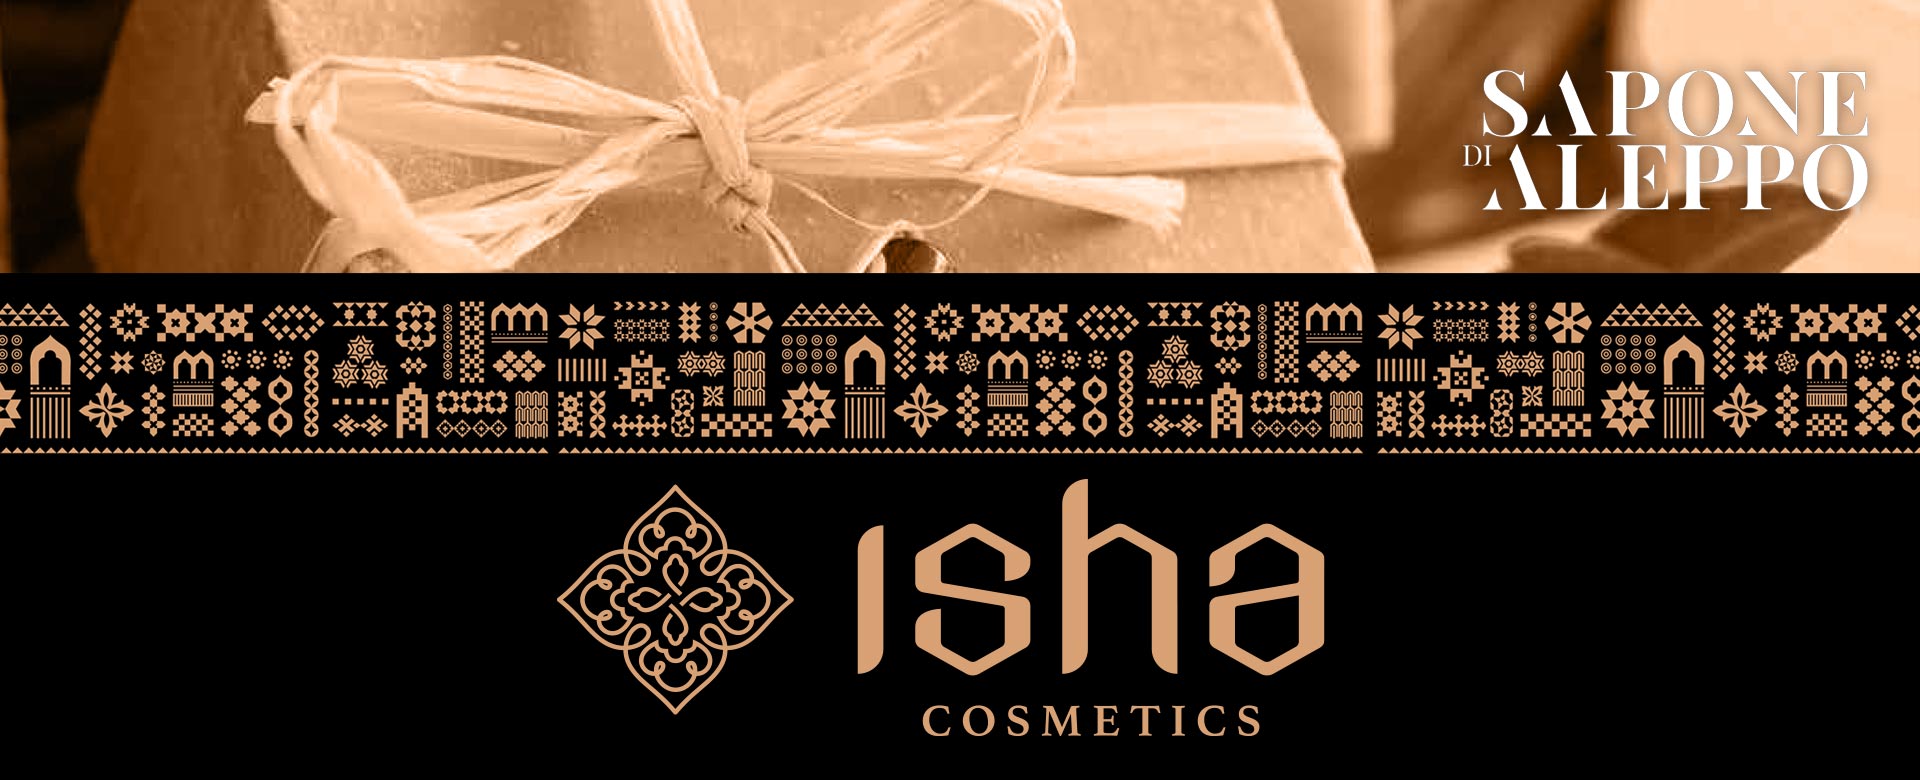 Isha Cosmetics - distribuzione - ingrosso